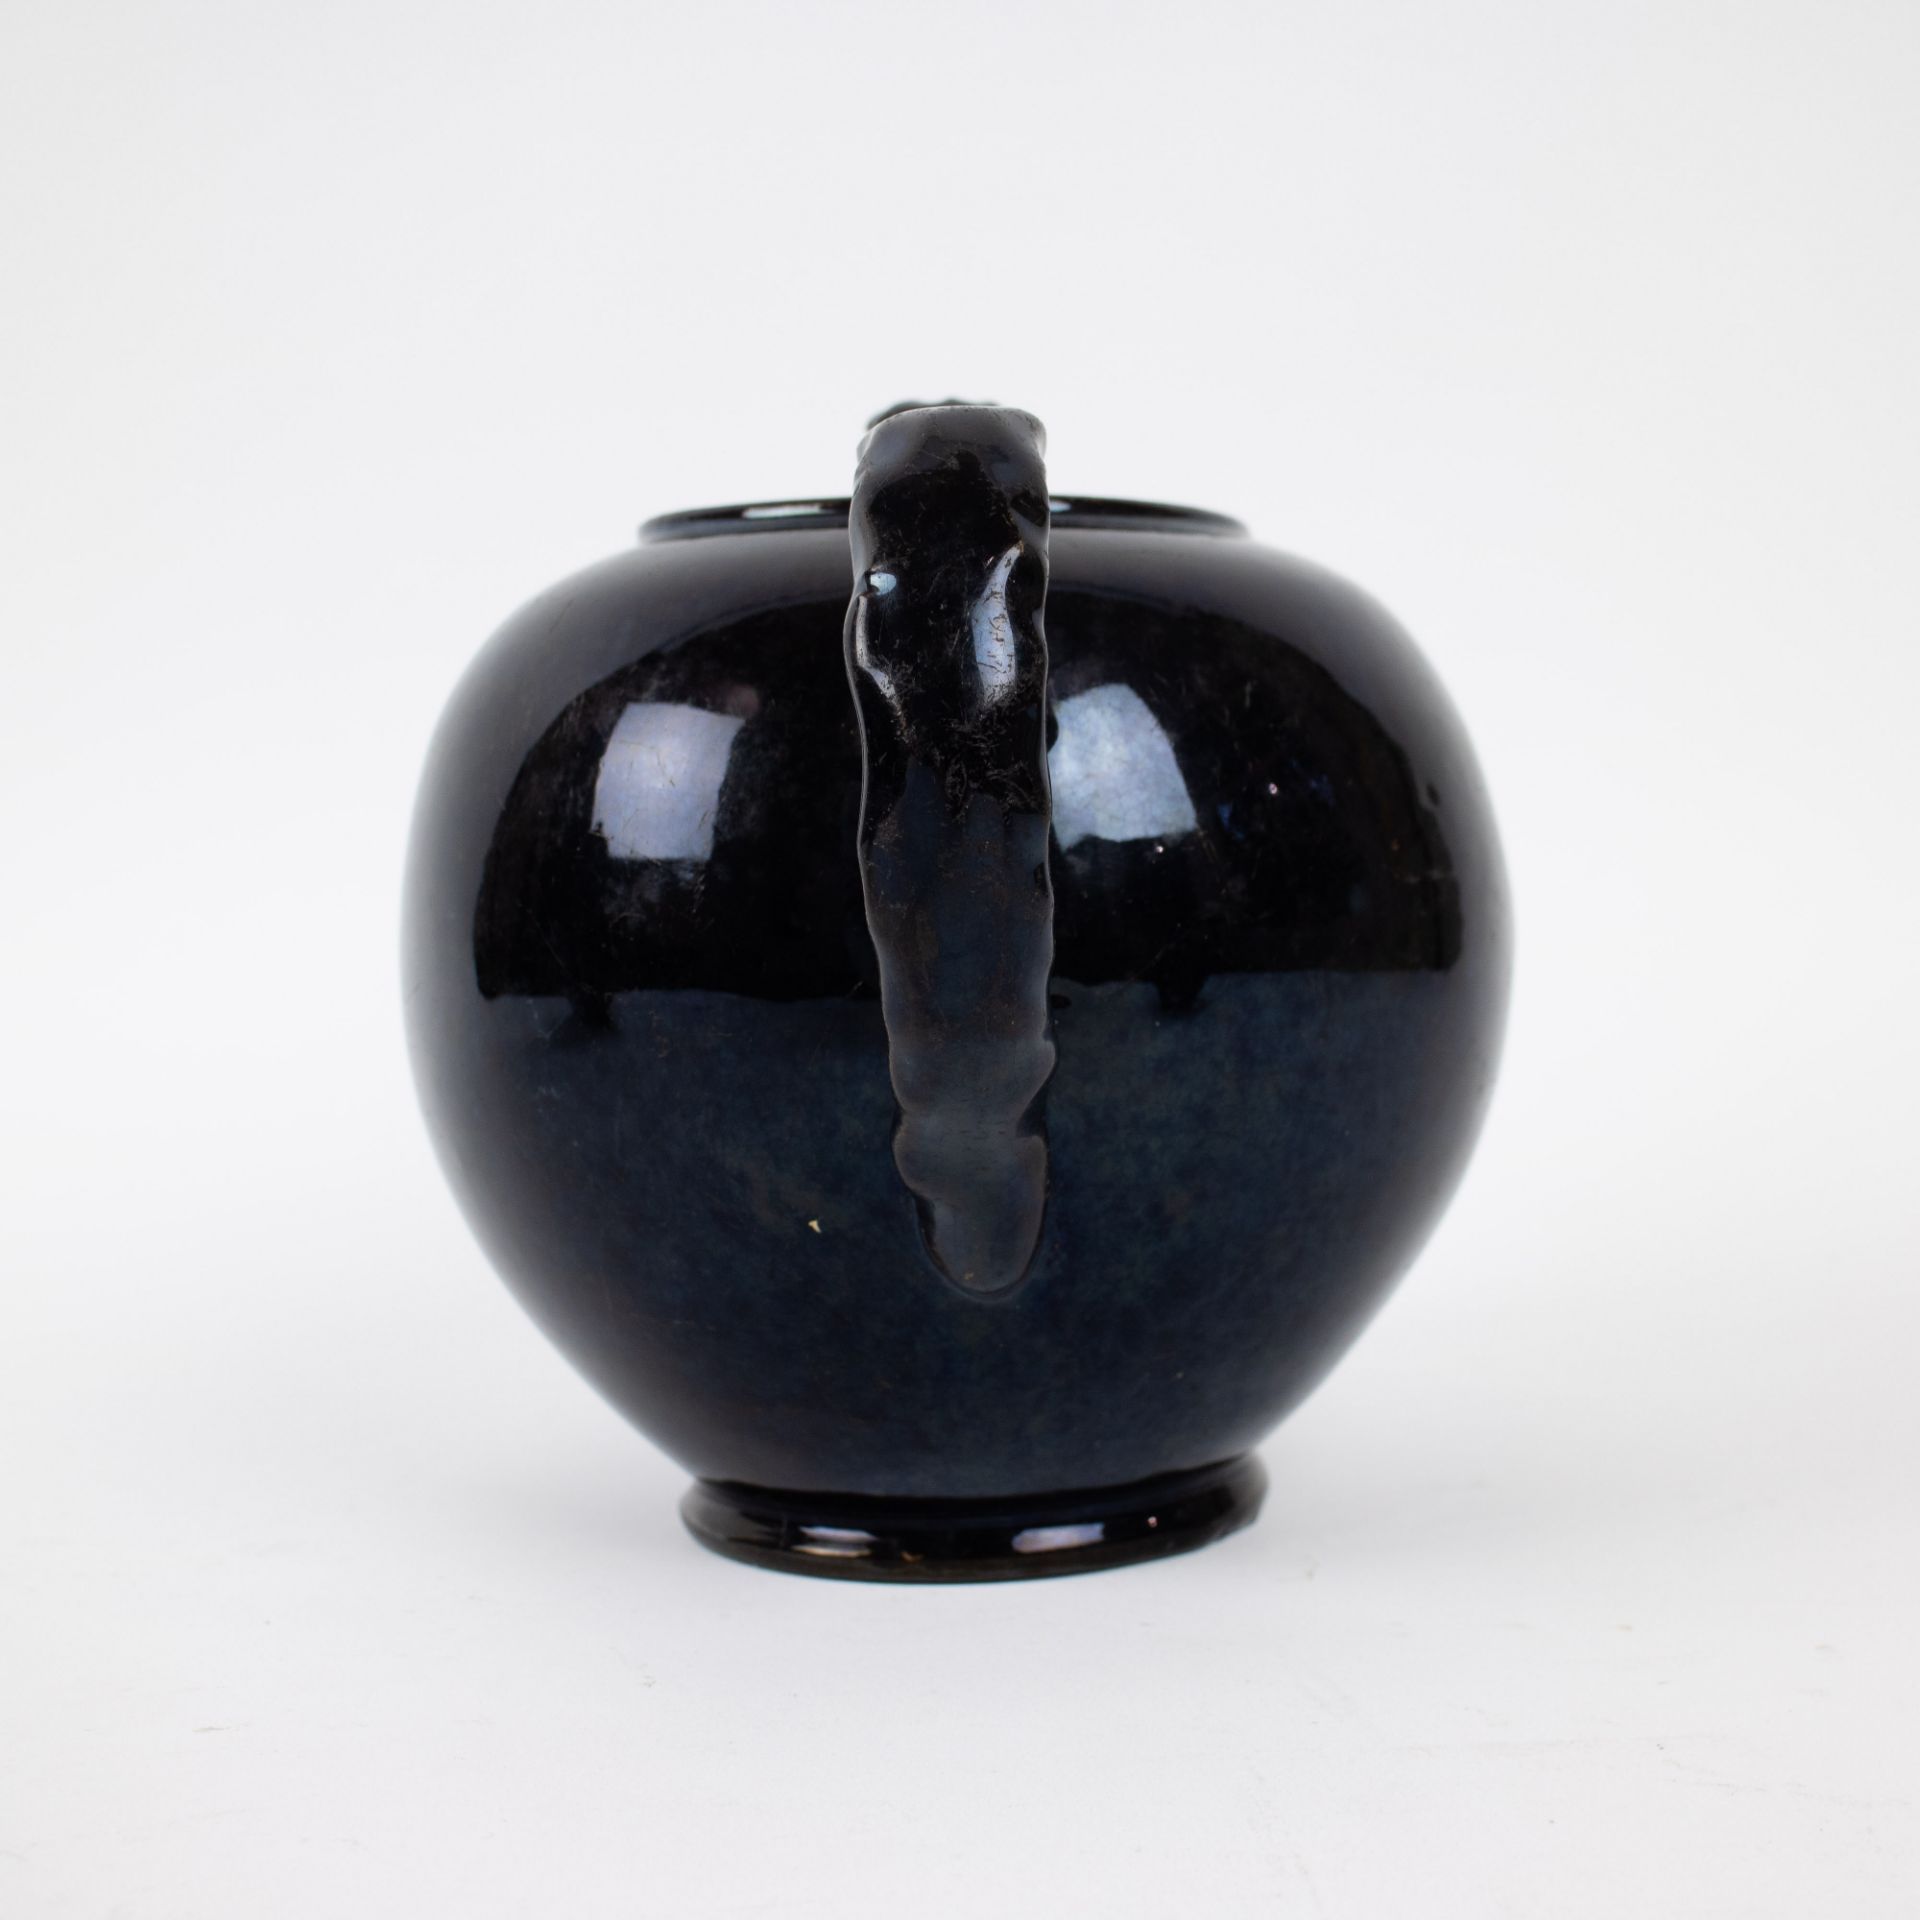 3 black glazed jugs in Namur earthenware, 18th century - Image 5 of 17